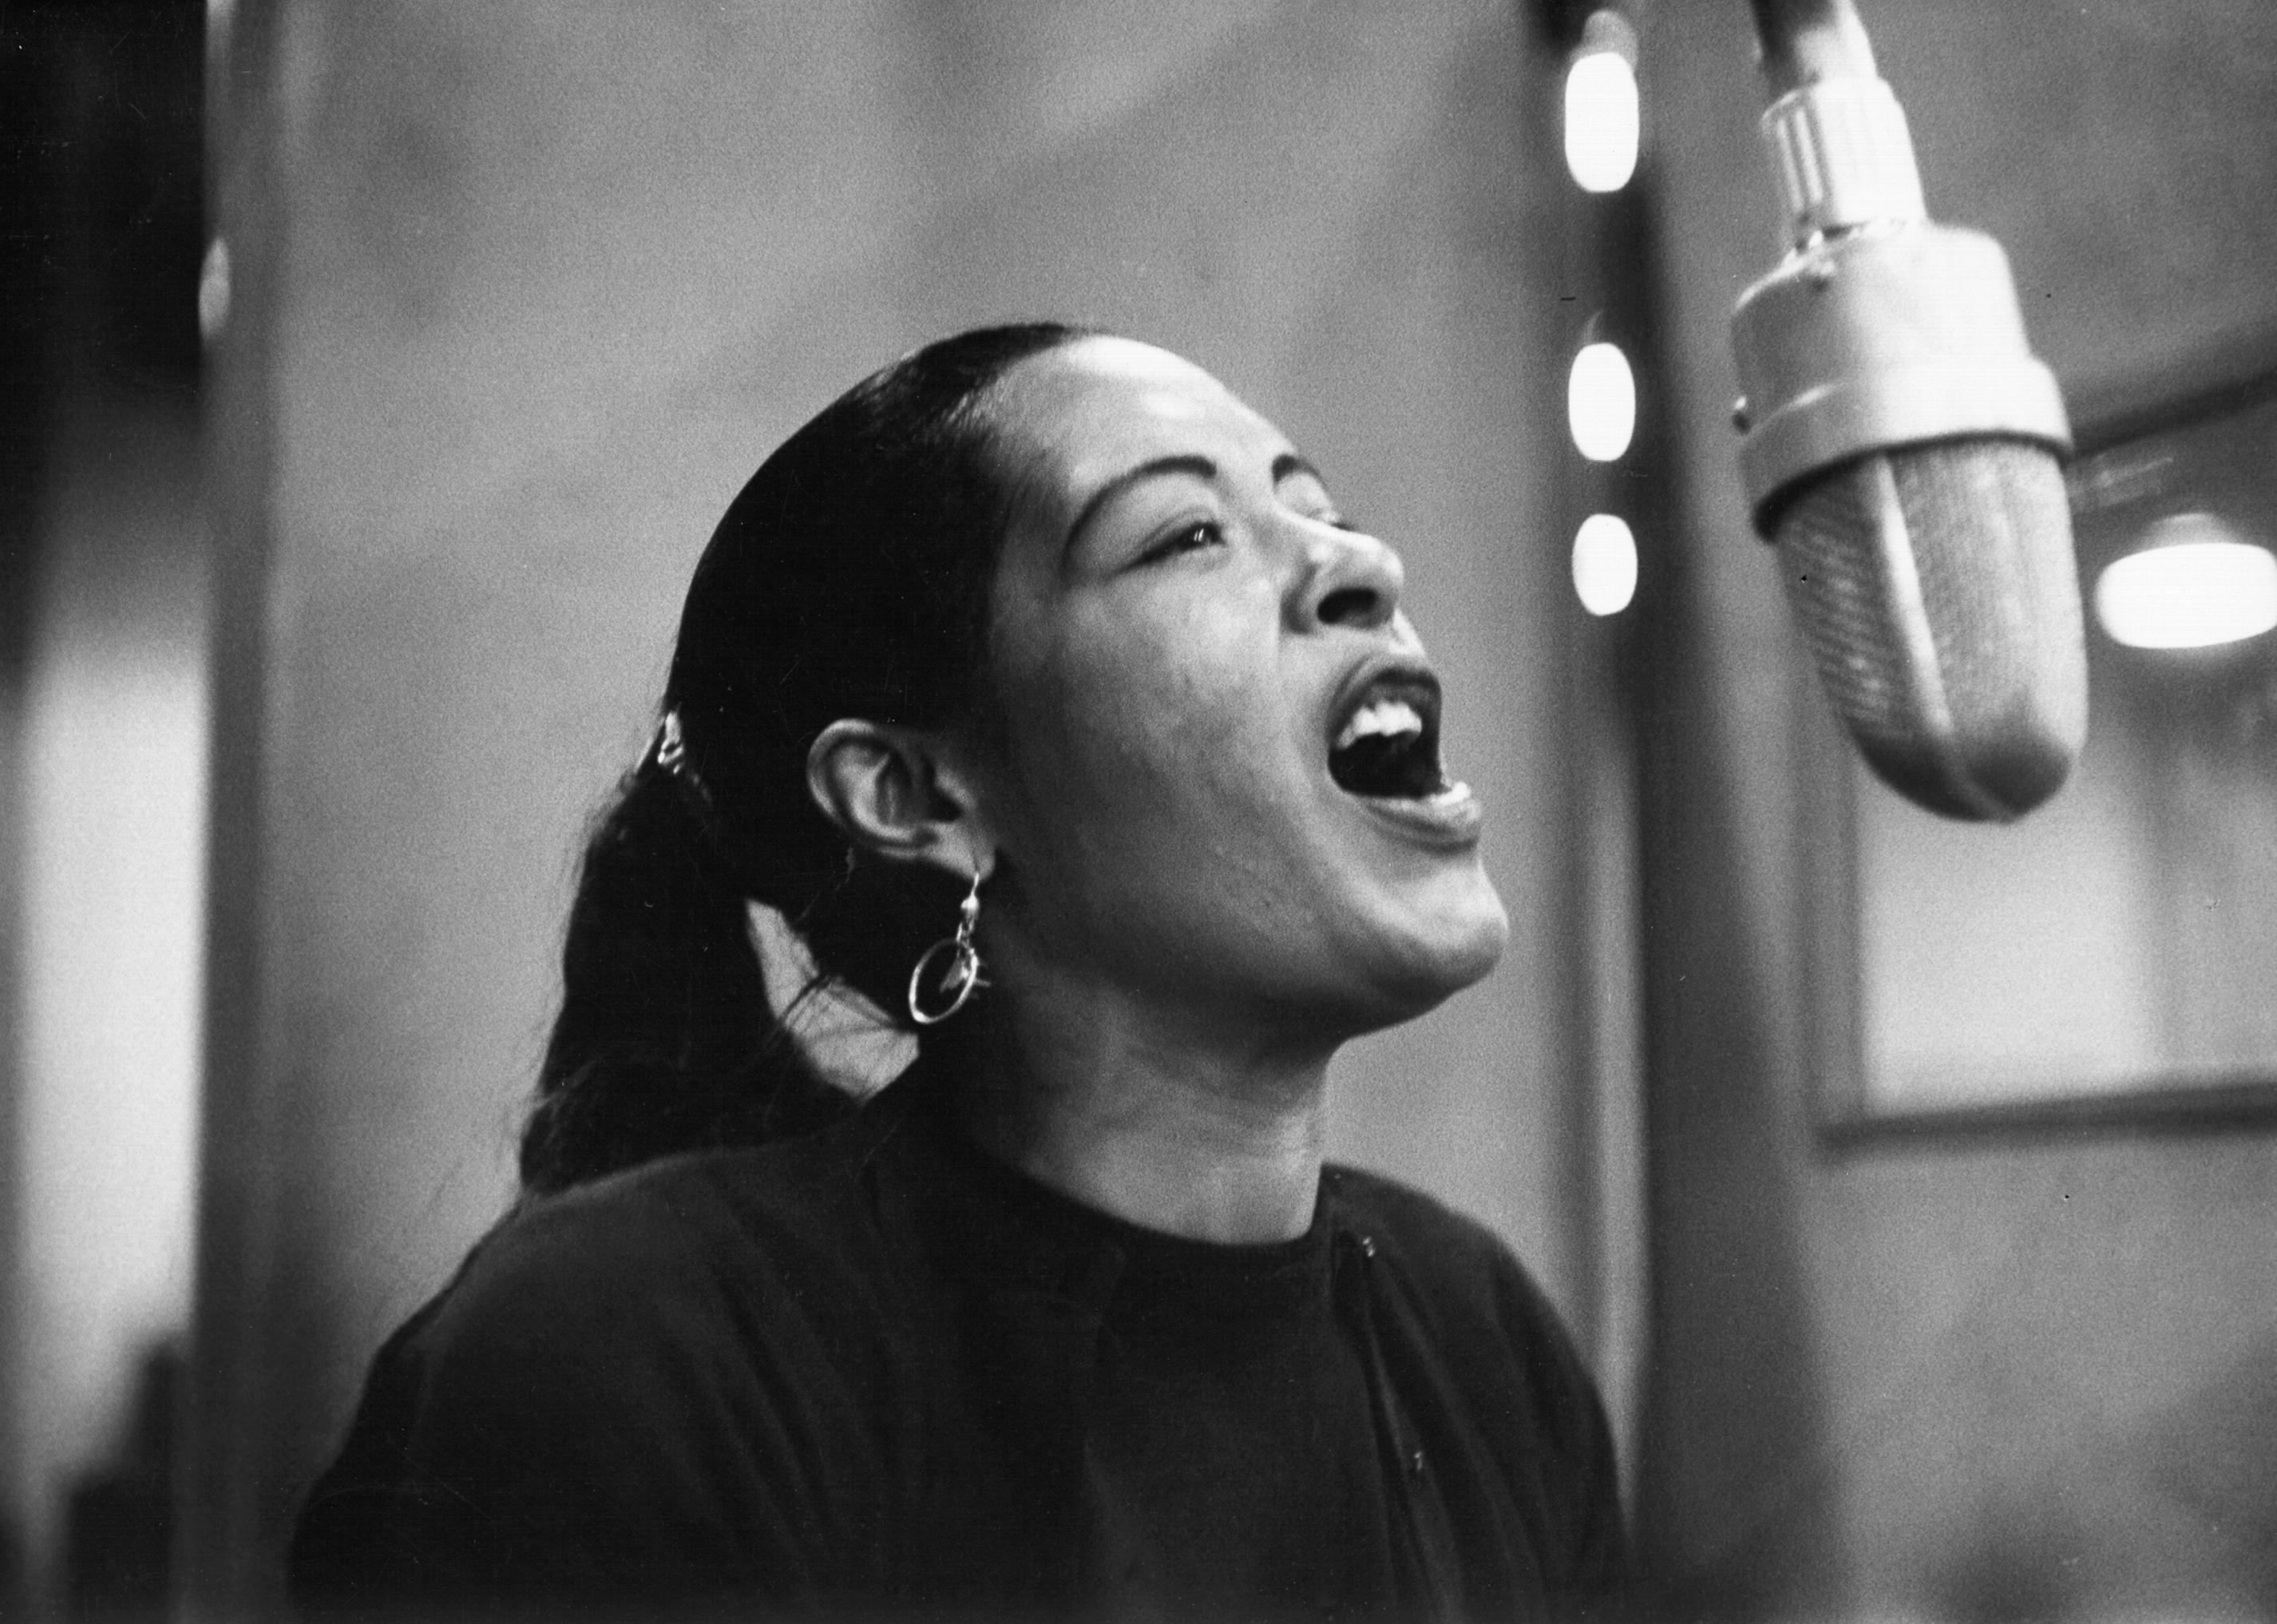 Billie Holiday records her penultimate album 